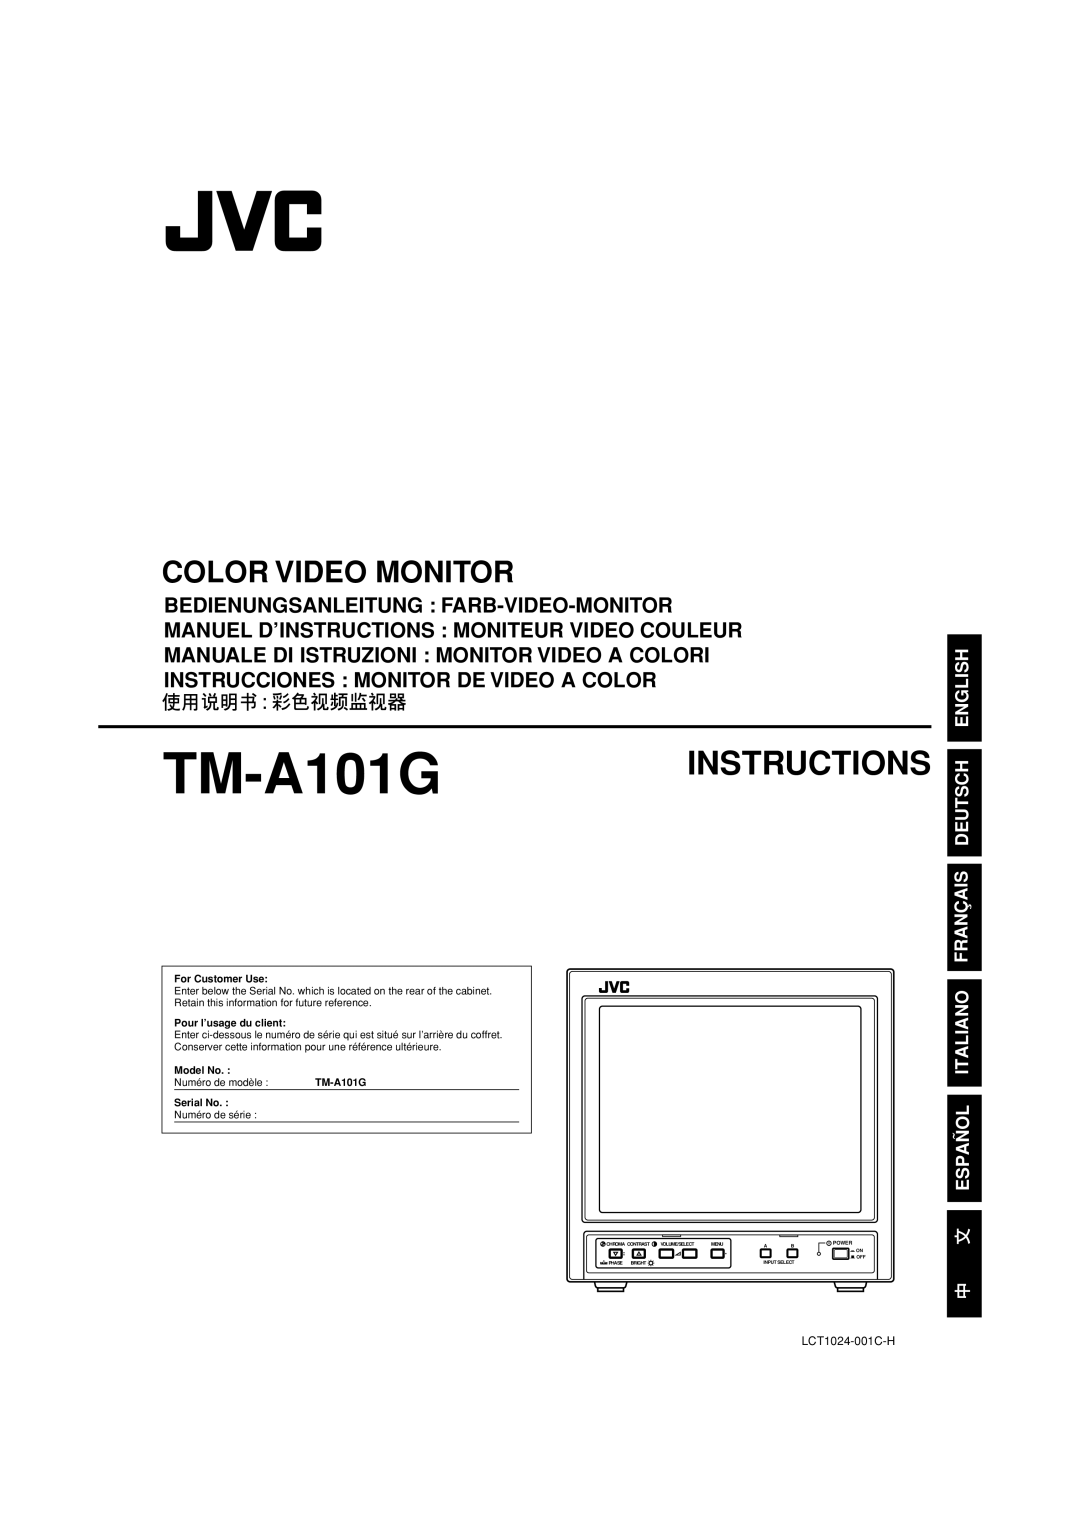 JVC TM-A101G manual Color Video Monitor, Bedienungsanleitung Farb-Video-Monitor, Instrucciones Monitor De Video A Color 